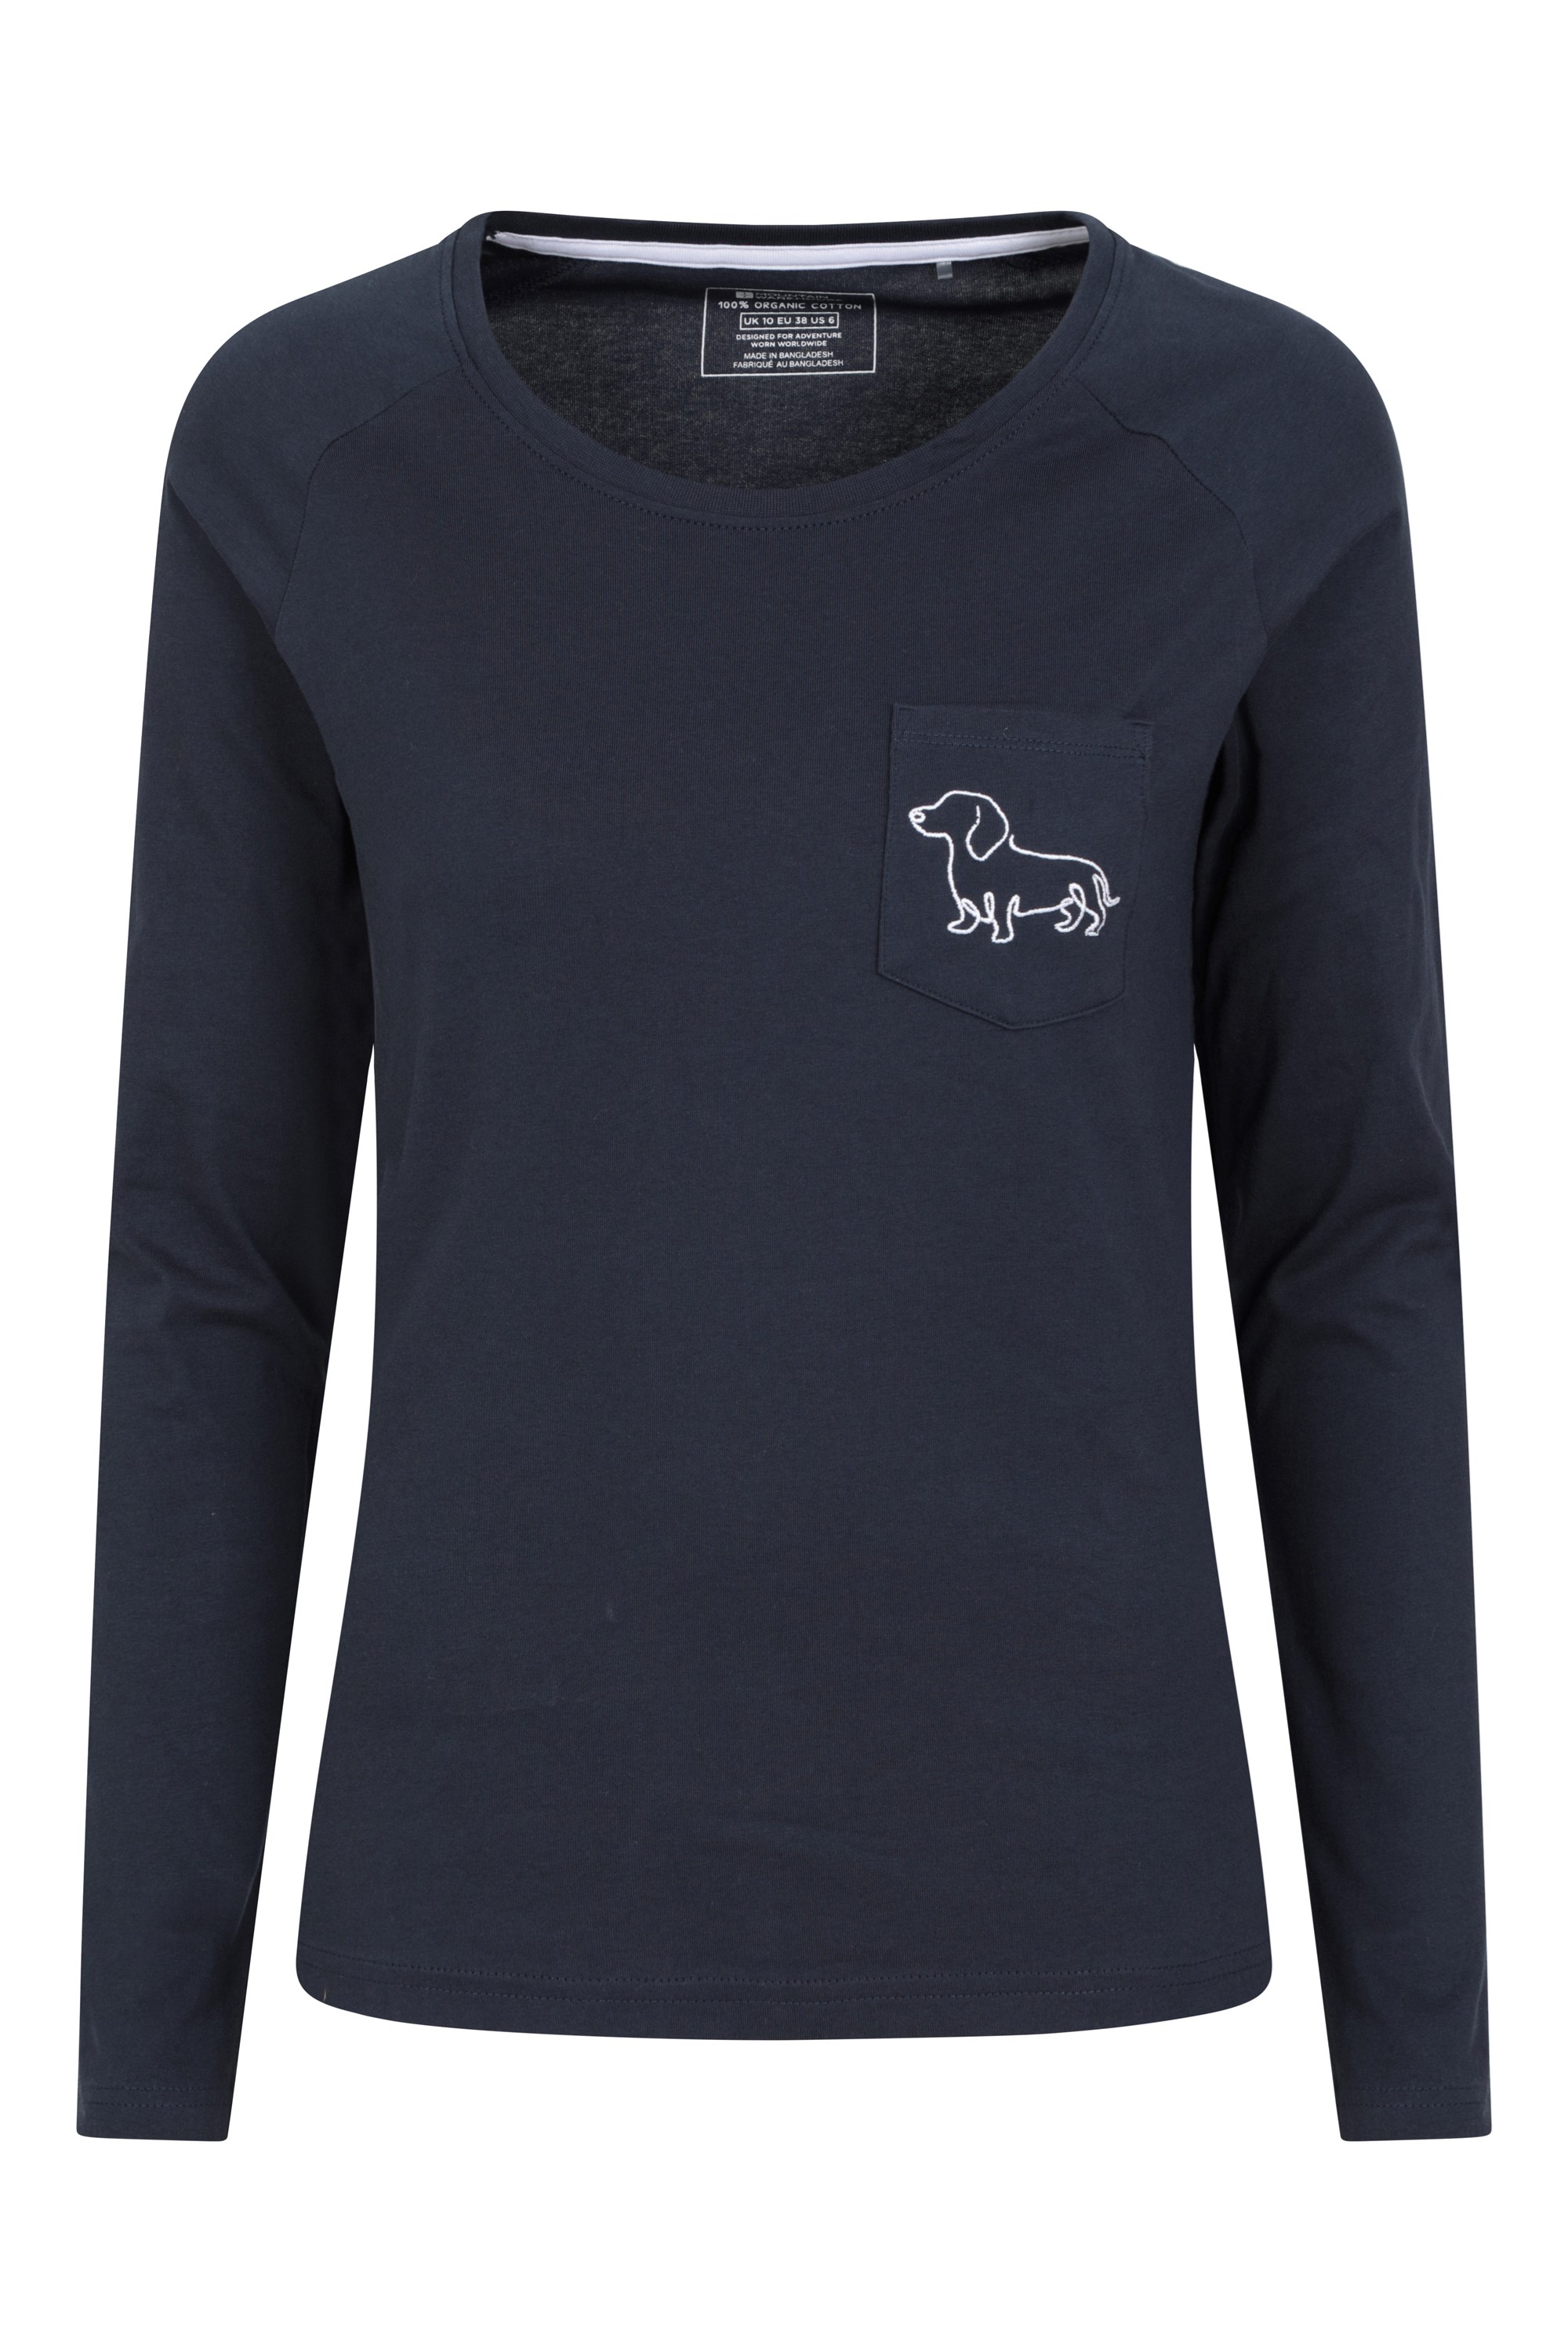 Pocket Dog Womens Organic T-Shirt - Navy